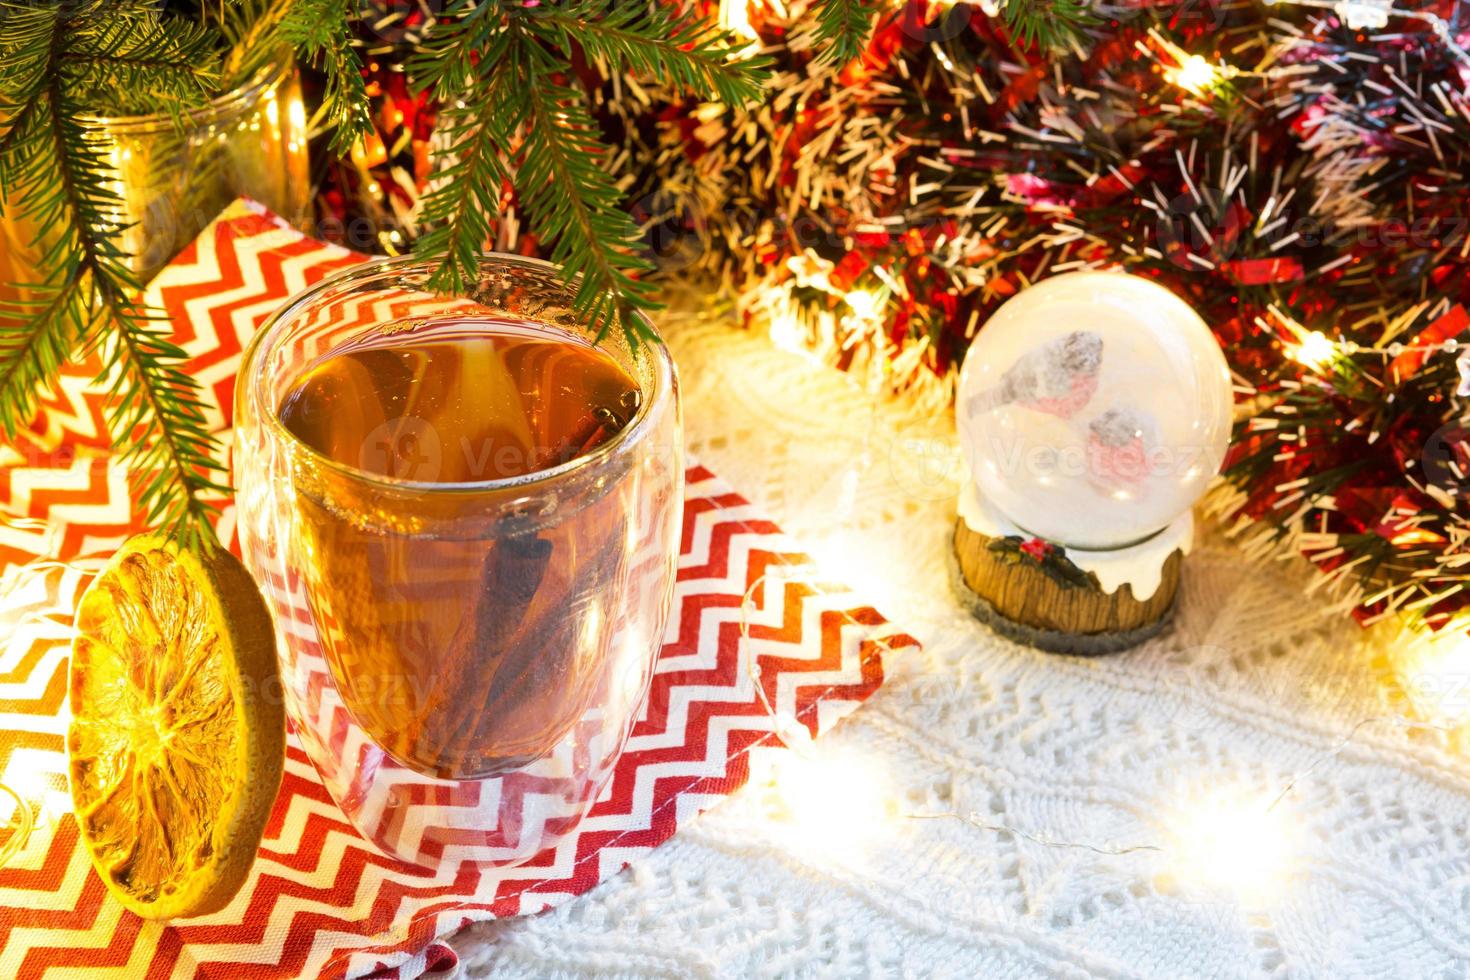 transparant dubbelwandig glas tuimelaar met heet thee en kaneel stokjes Aan tafel met Kerstmis decor. nieuw jaar atmosfeer, plak van droog oranje, slinger en klatergoud, sneeuw wereldbol met goudvinken foto